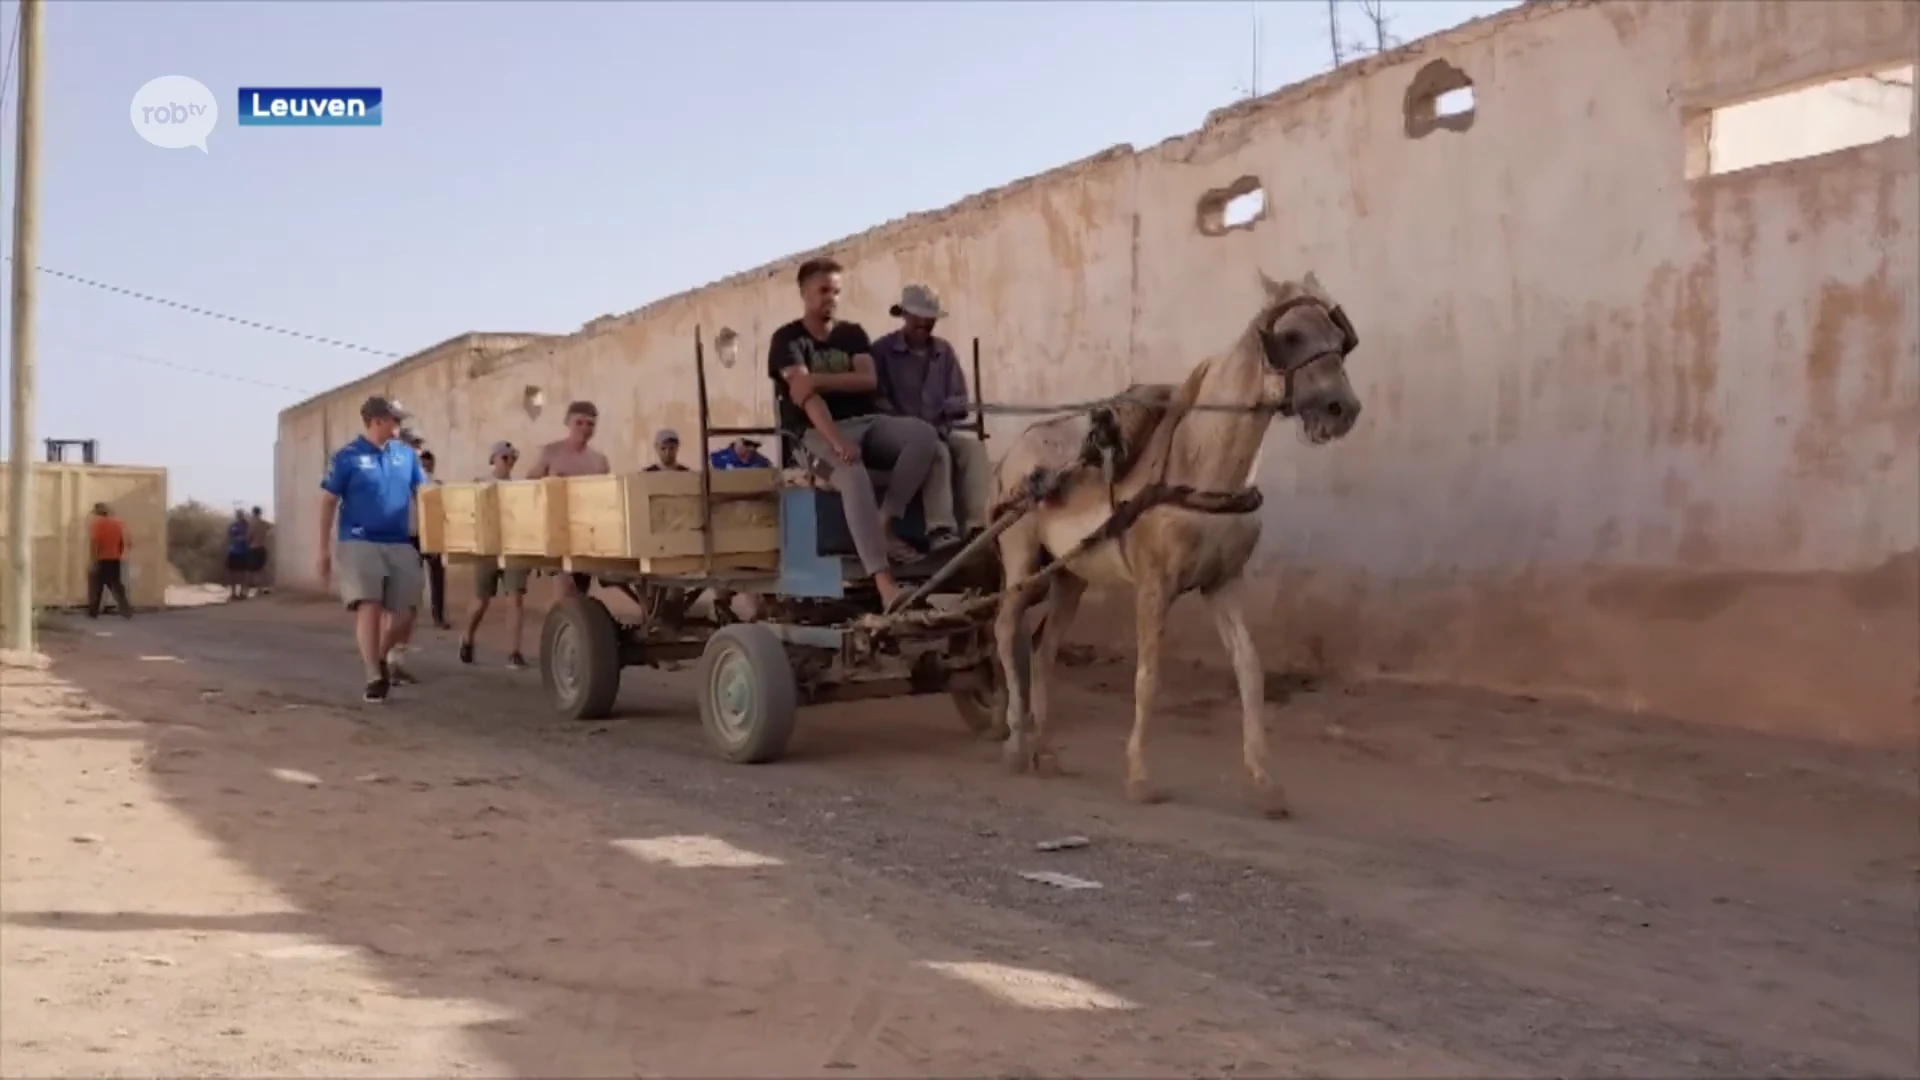 Solar Team KU Leuven vervoert zonnewagen met paard en kar in Marokko